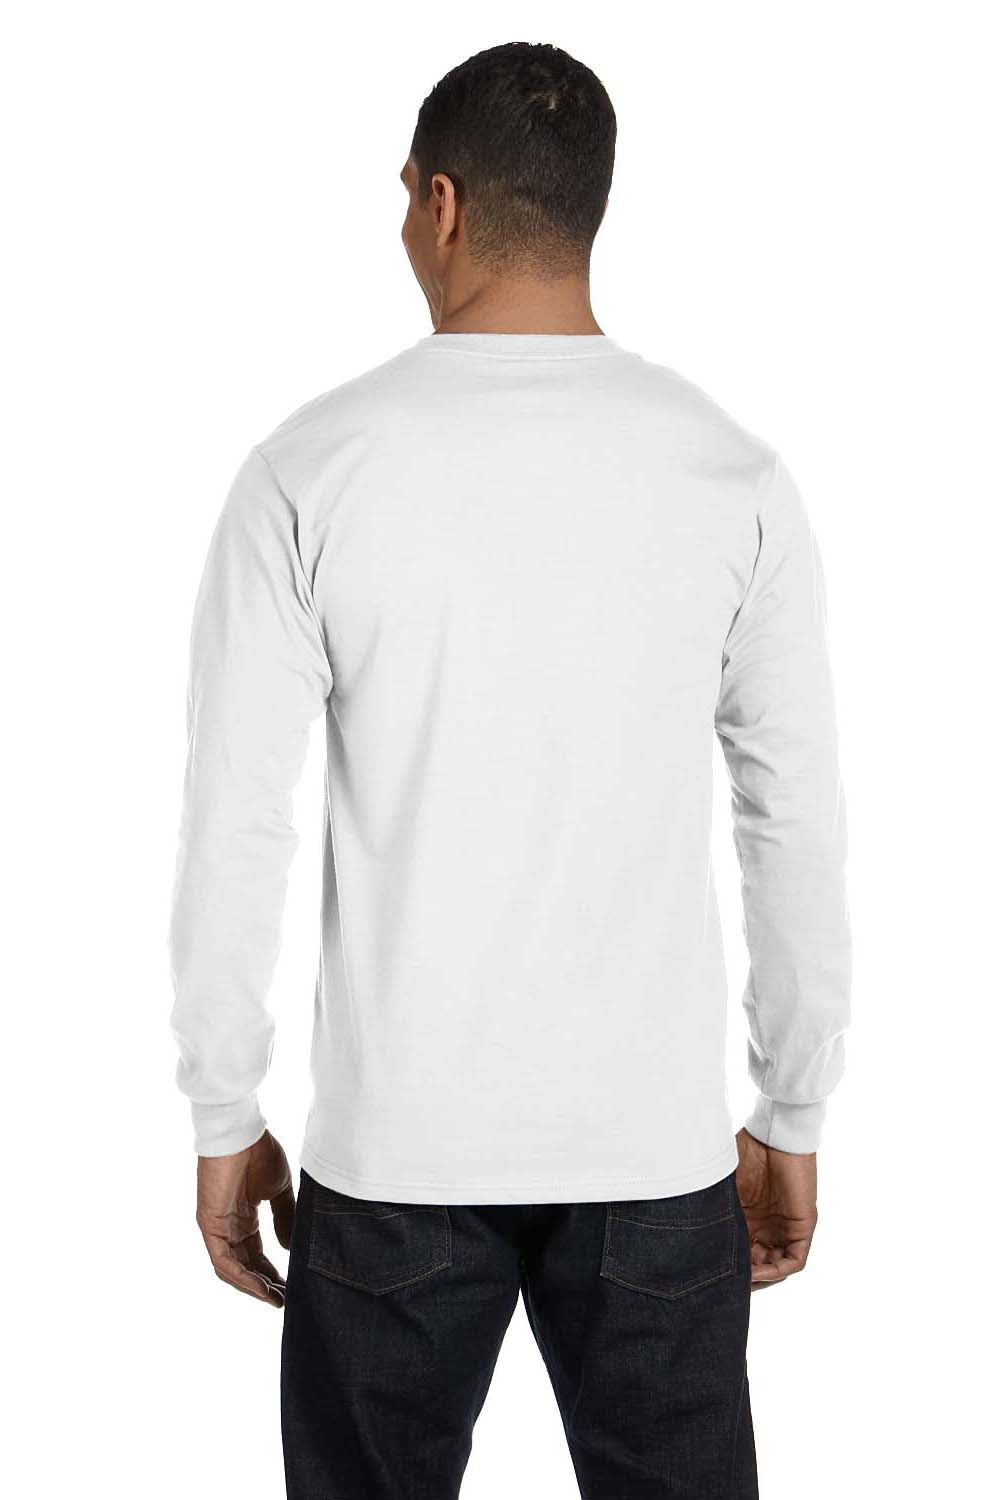 Gildan G840 Mens DryBlend Moisture Wicking Long Sleeve Crewneck T-Shirt White Back